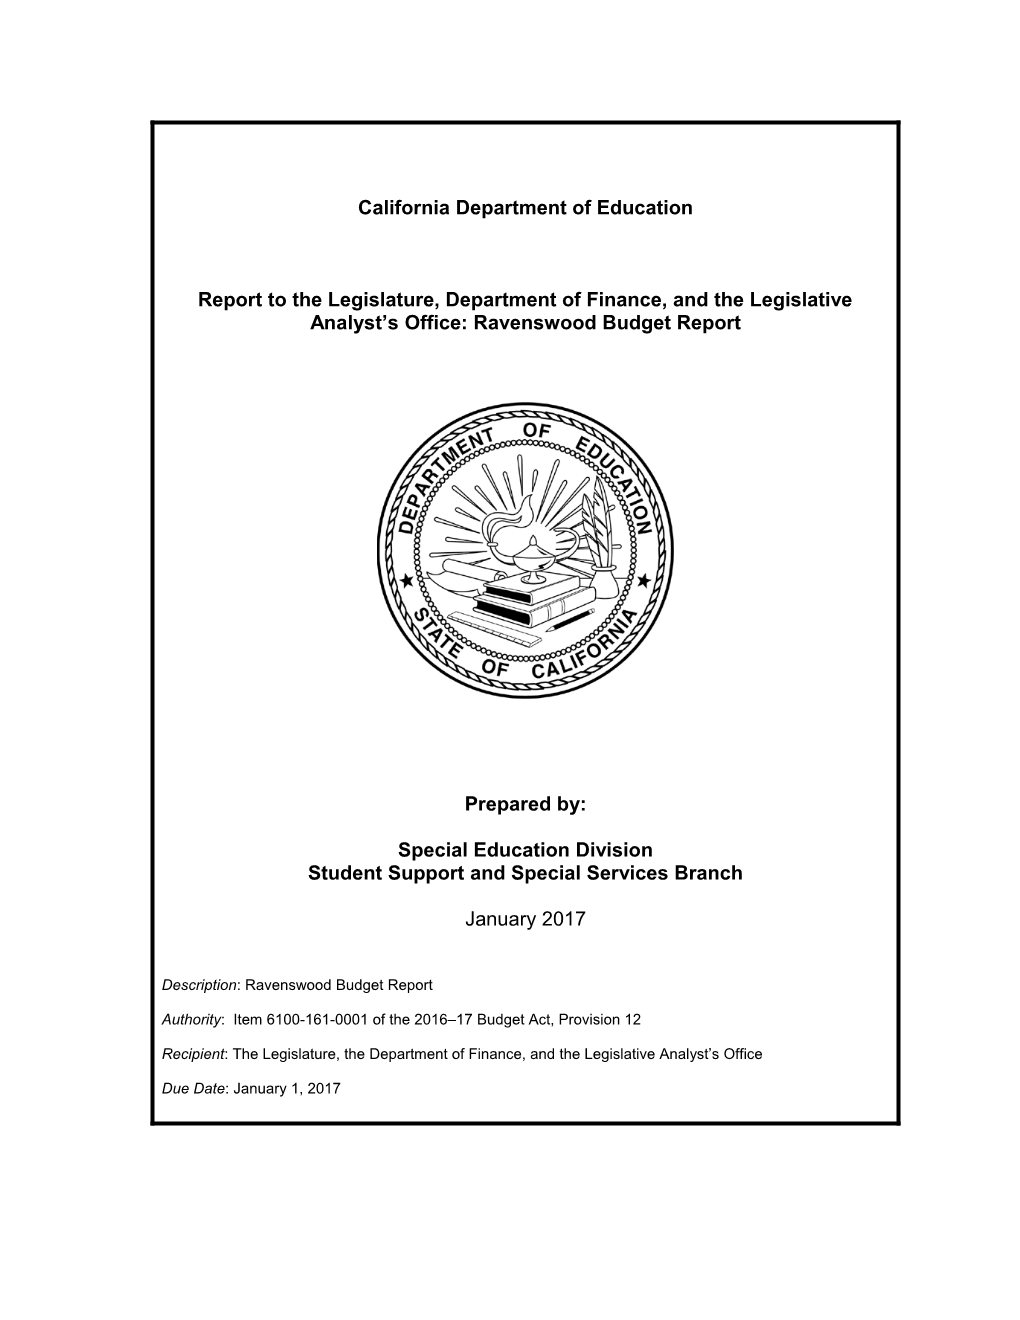 Ravenswood Budget Report to the Legislature - Laws, Regulations, & Policies (CA Dept Of